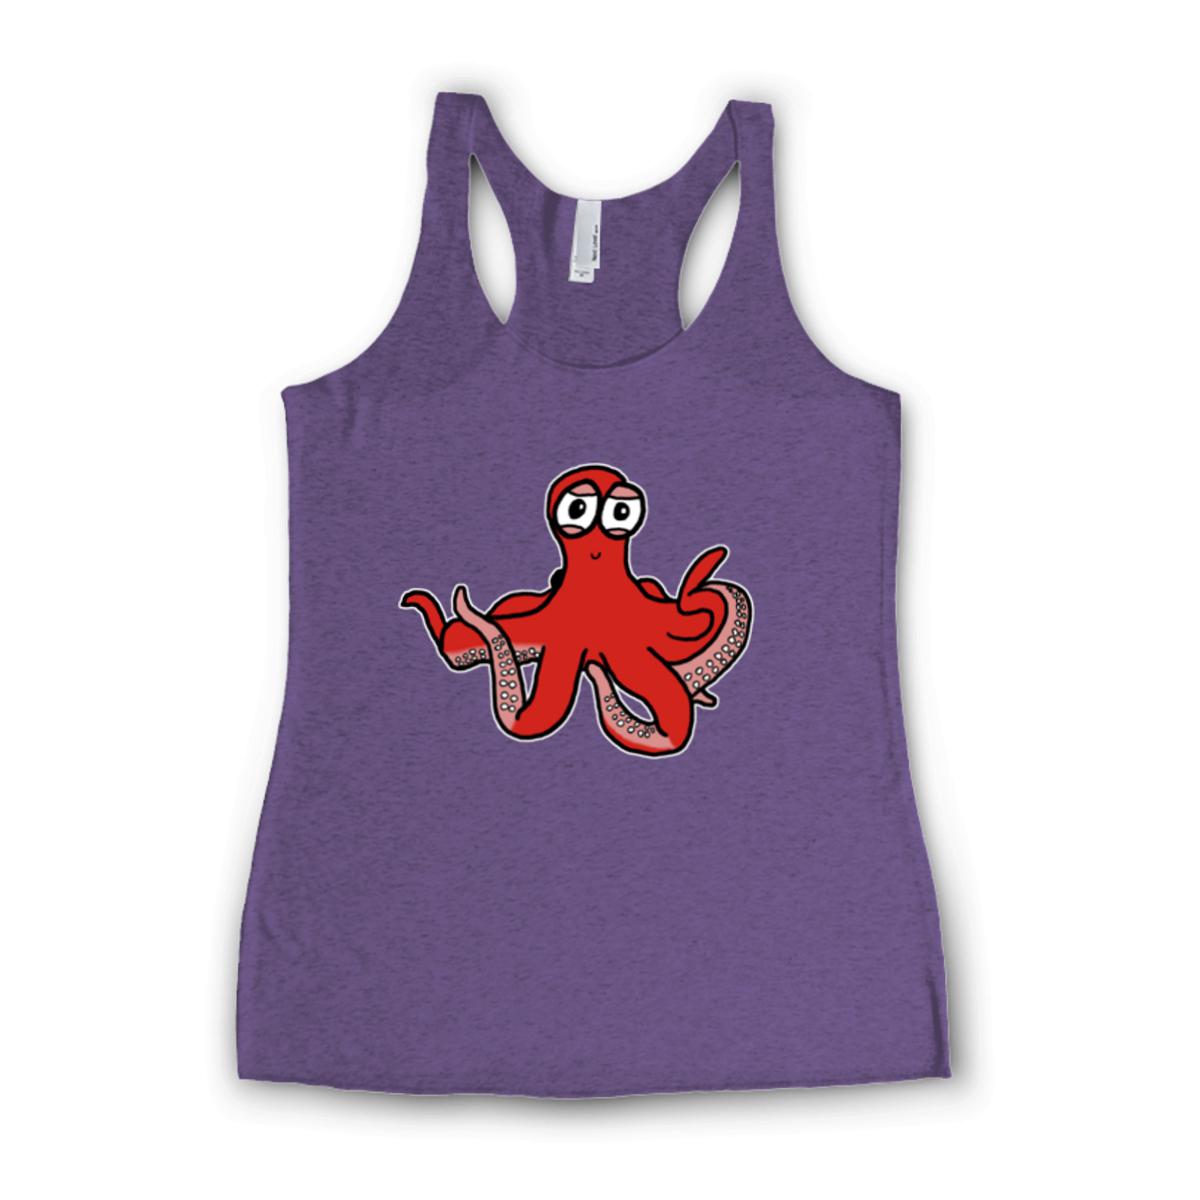 Octopus Ladies' Racerback Tank Extra Small purple-rush